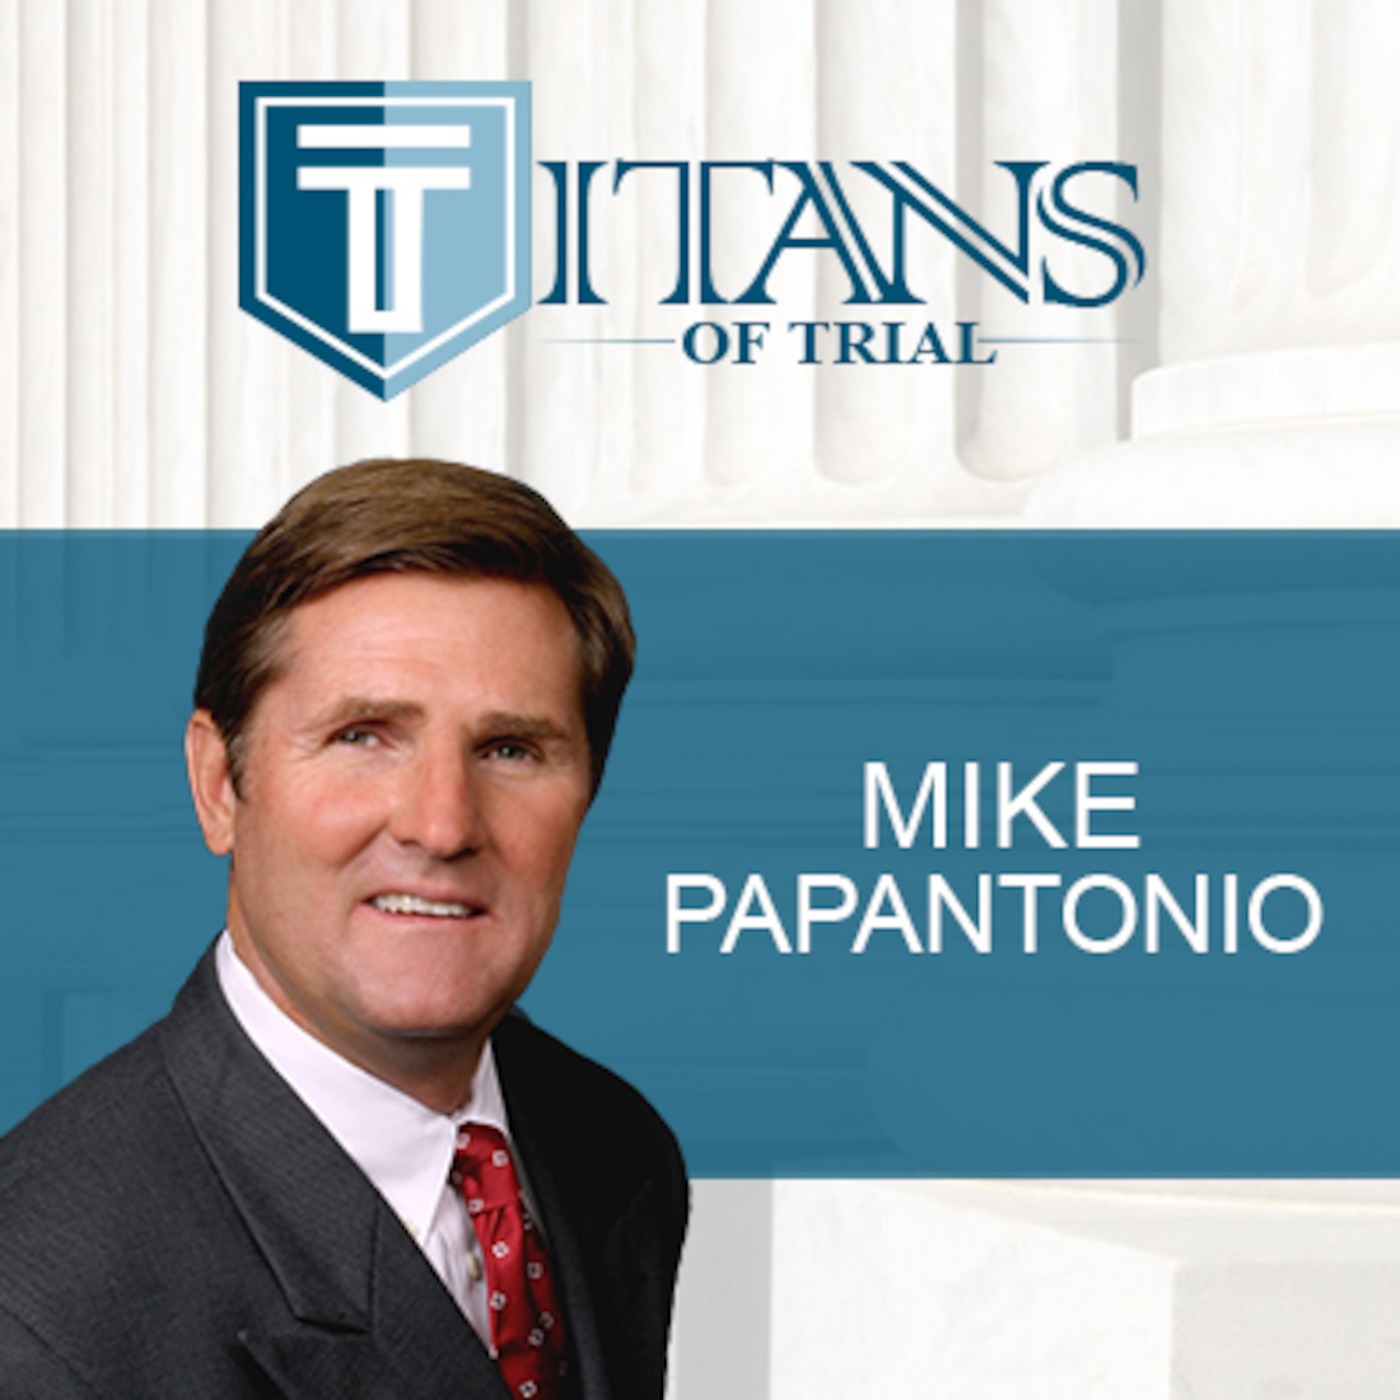 Titans of Trial - Mike Papantonio